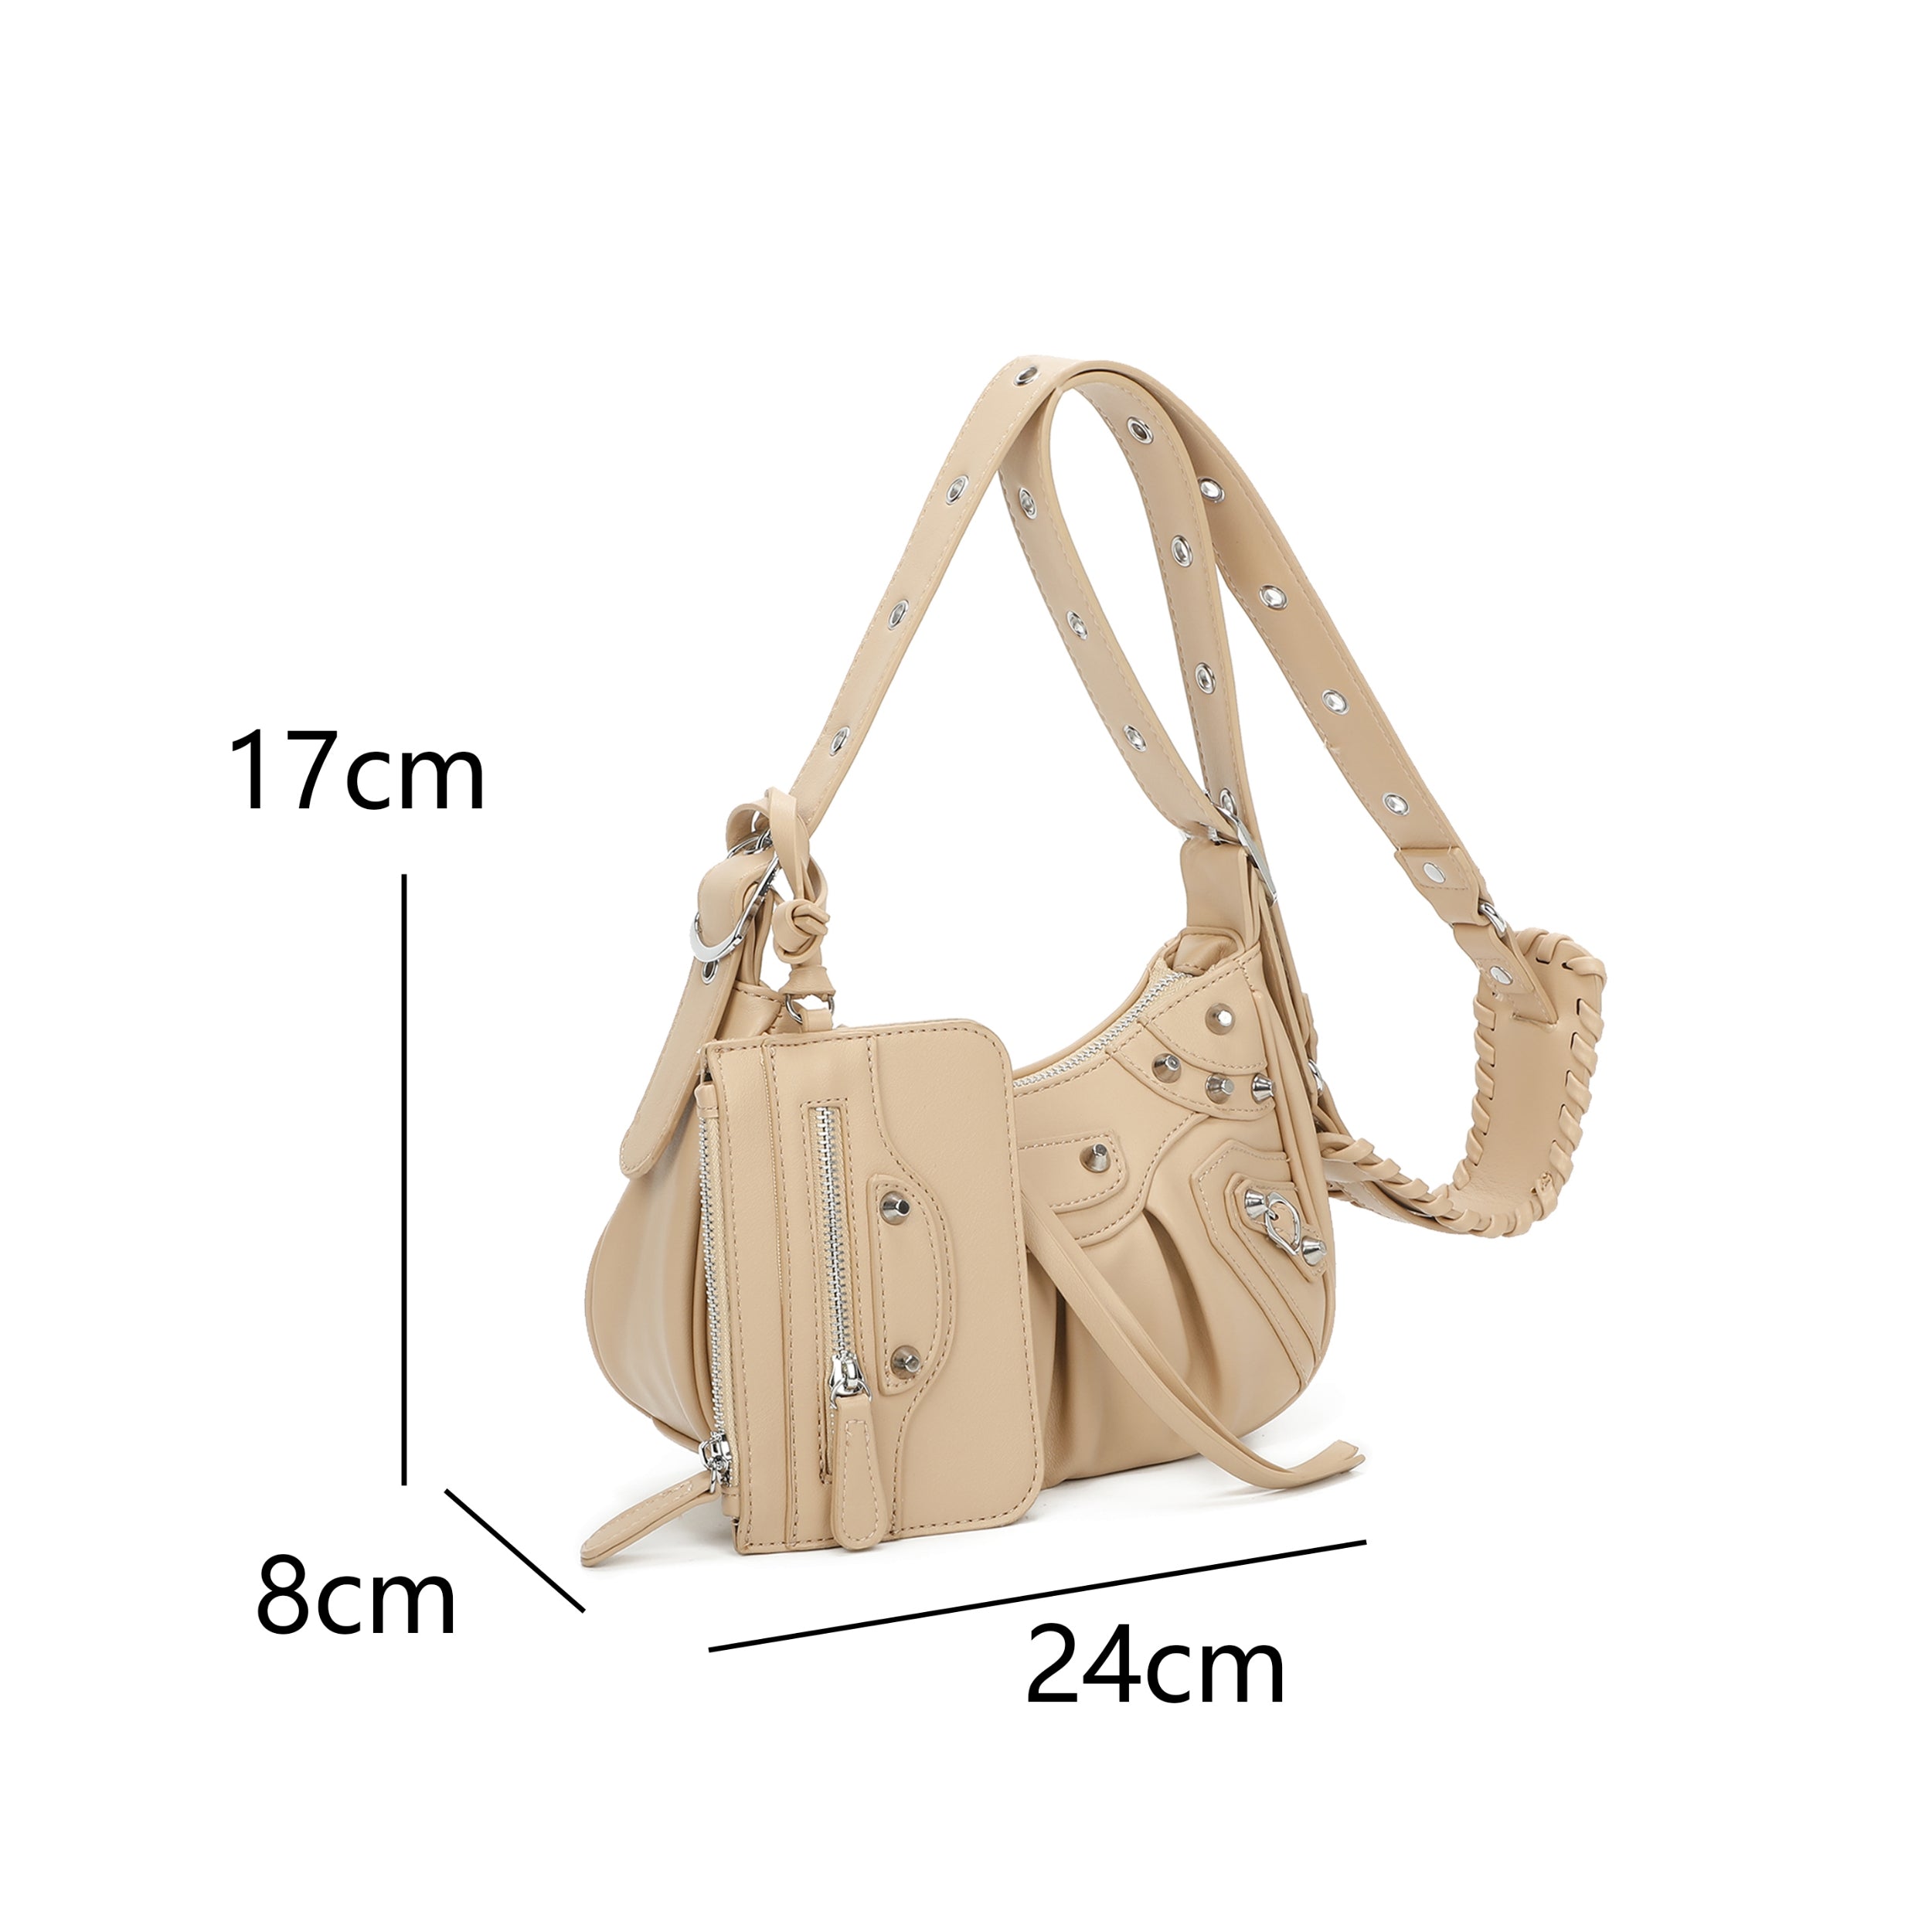 Craze London Satchel bag with External zipped purse